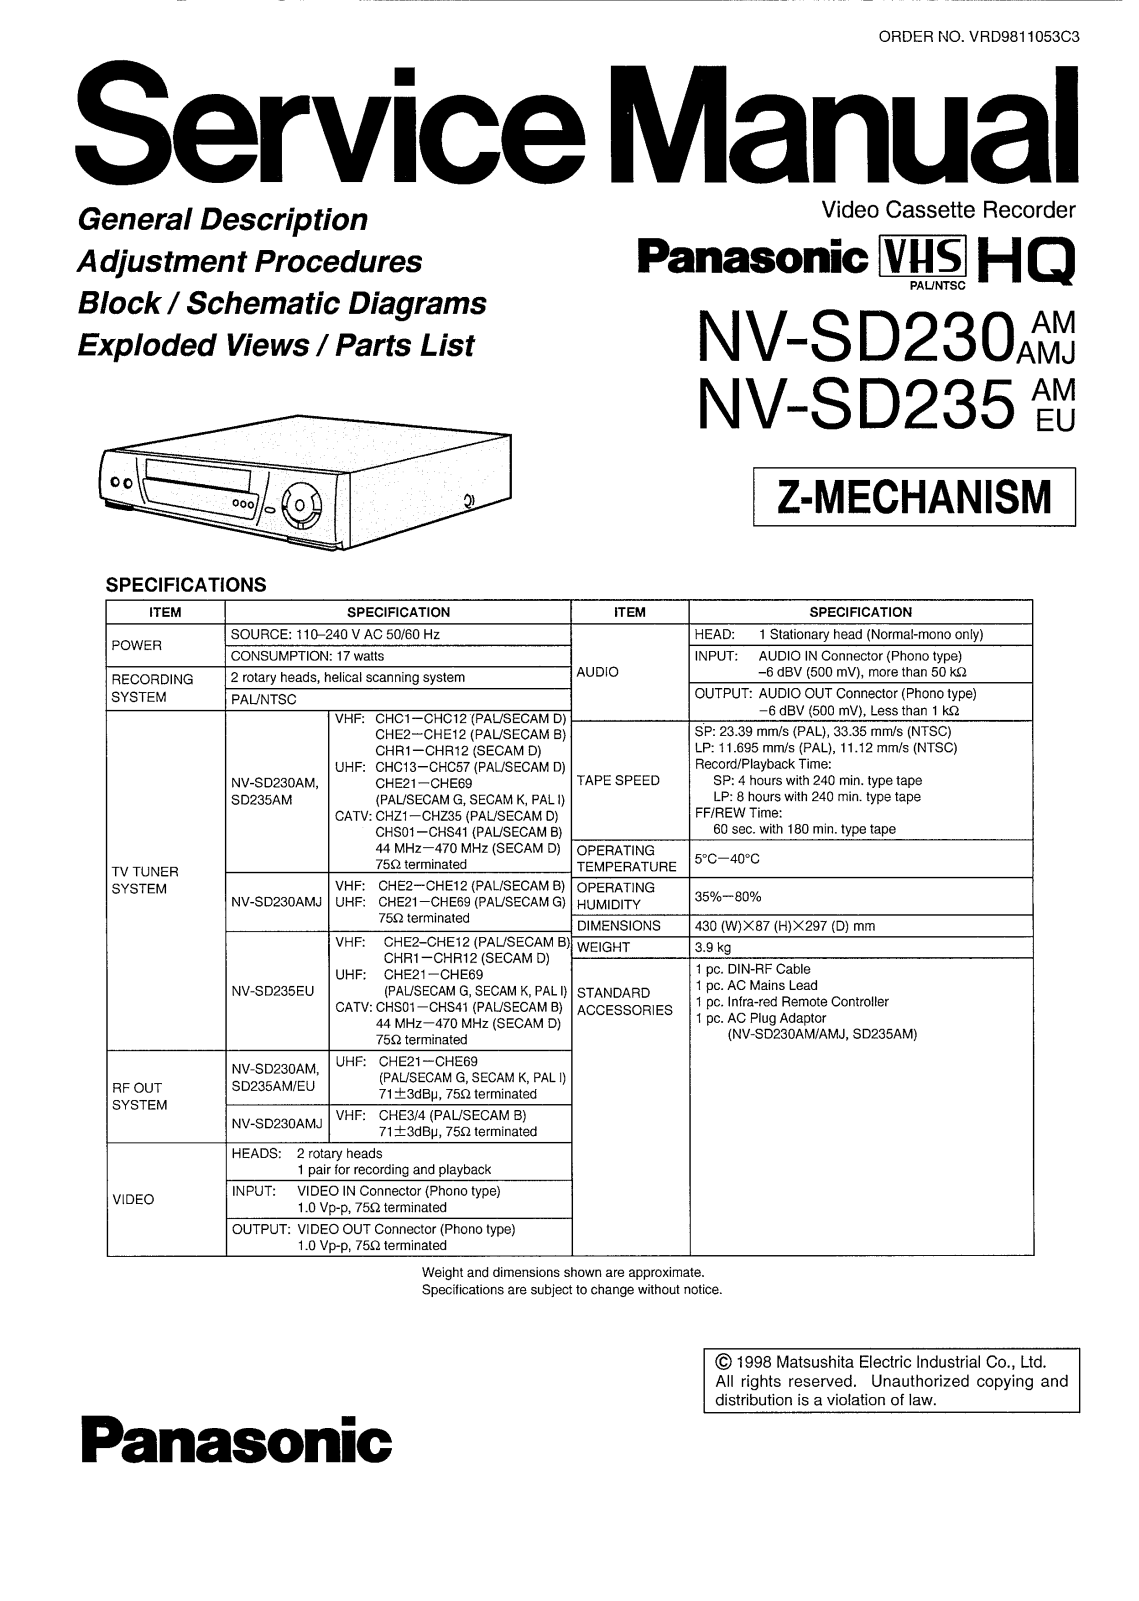 PANASONIC NV-SD230, NV-SD235 Service Manual